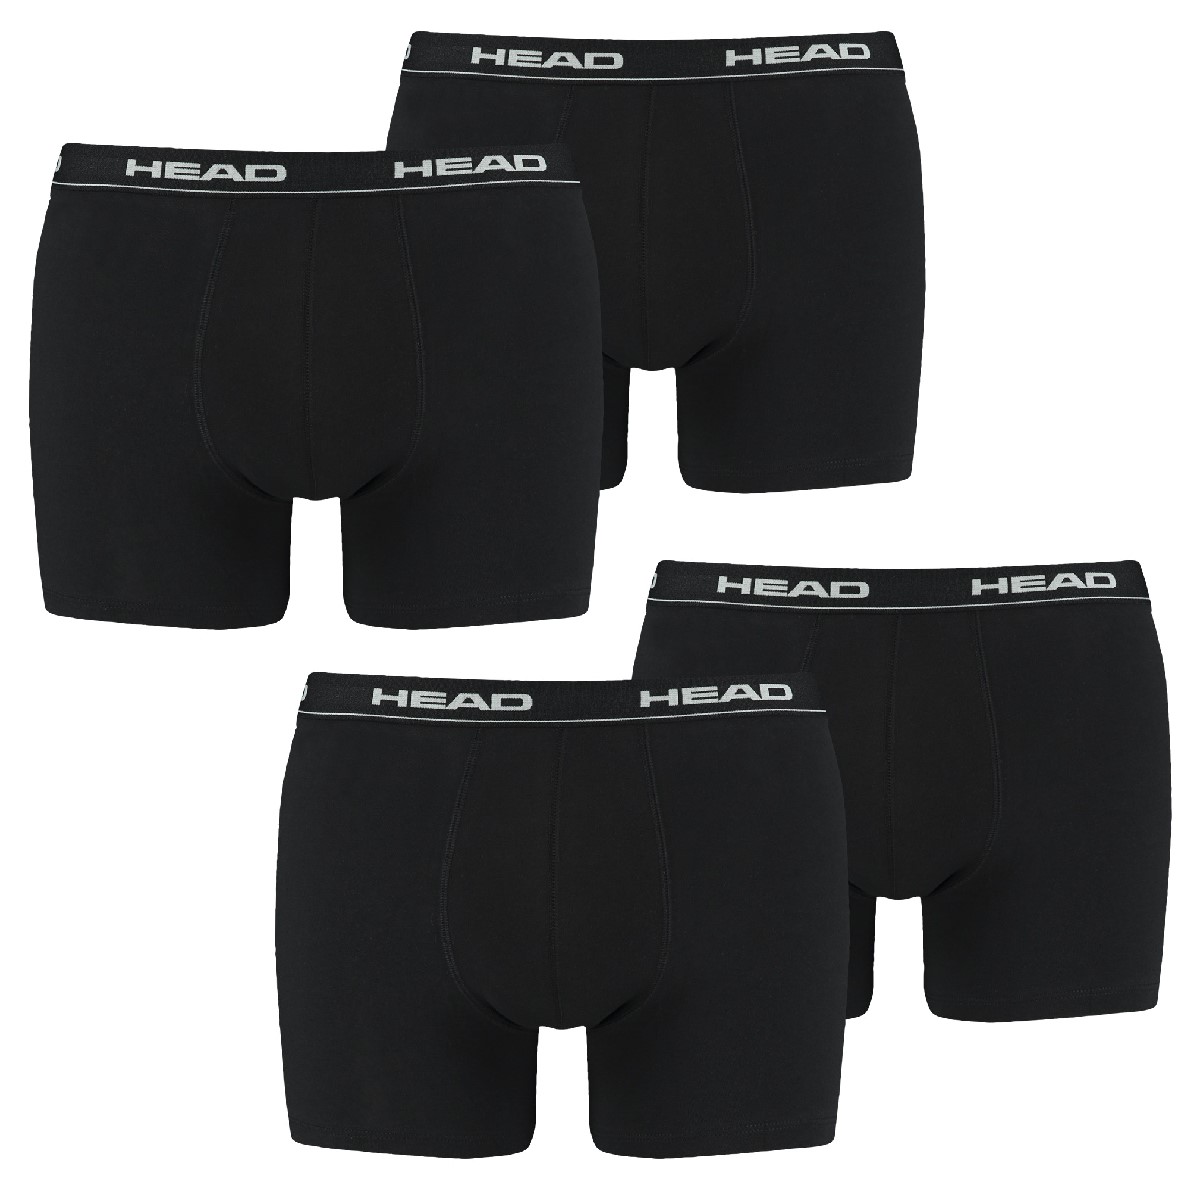 MULTIPACK BOXERS 4 PACK Head Herren Boxer Boxershorts Basic Pant Unterwäsche M, 200 - black